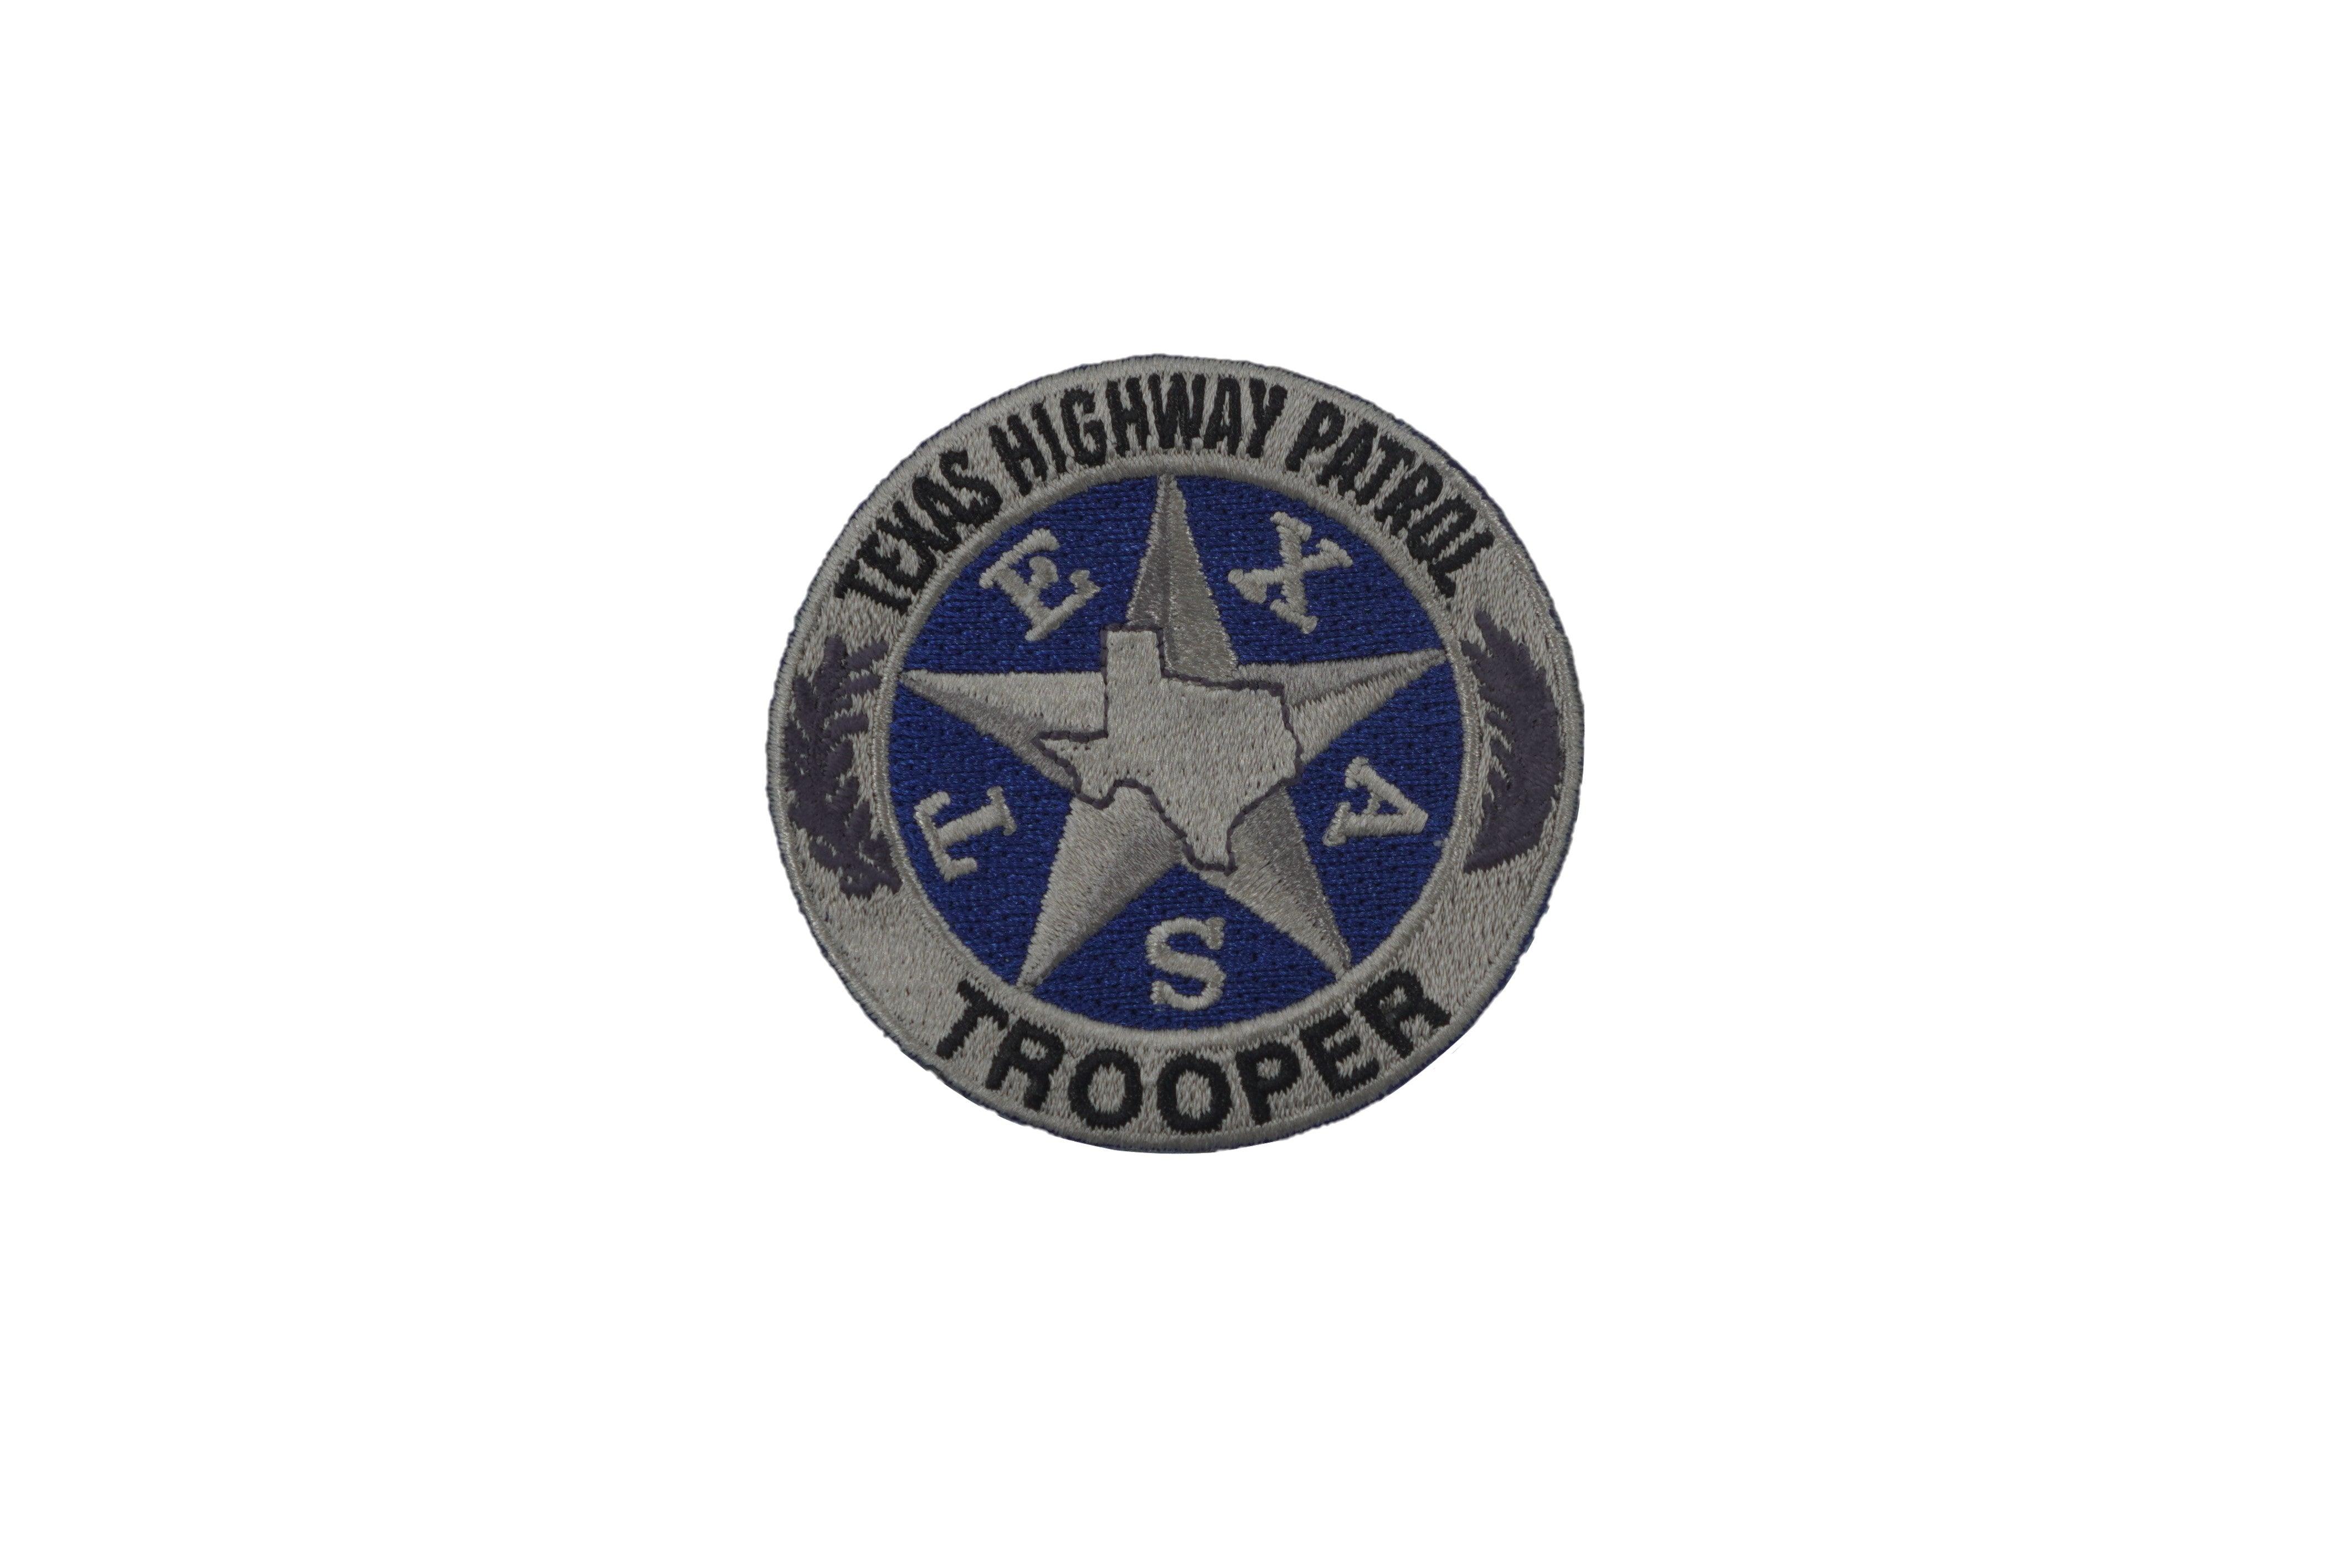 Texas Ranger Patch – Texas DPSOA Online Store